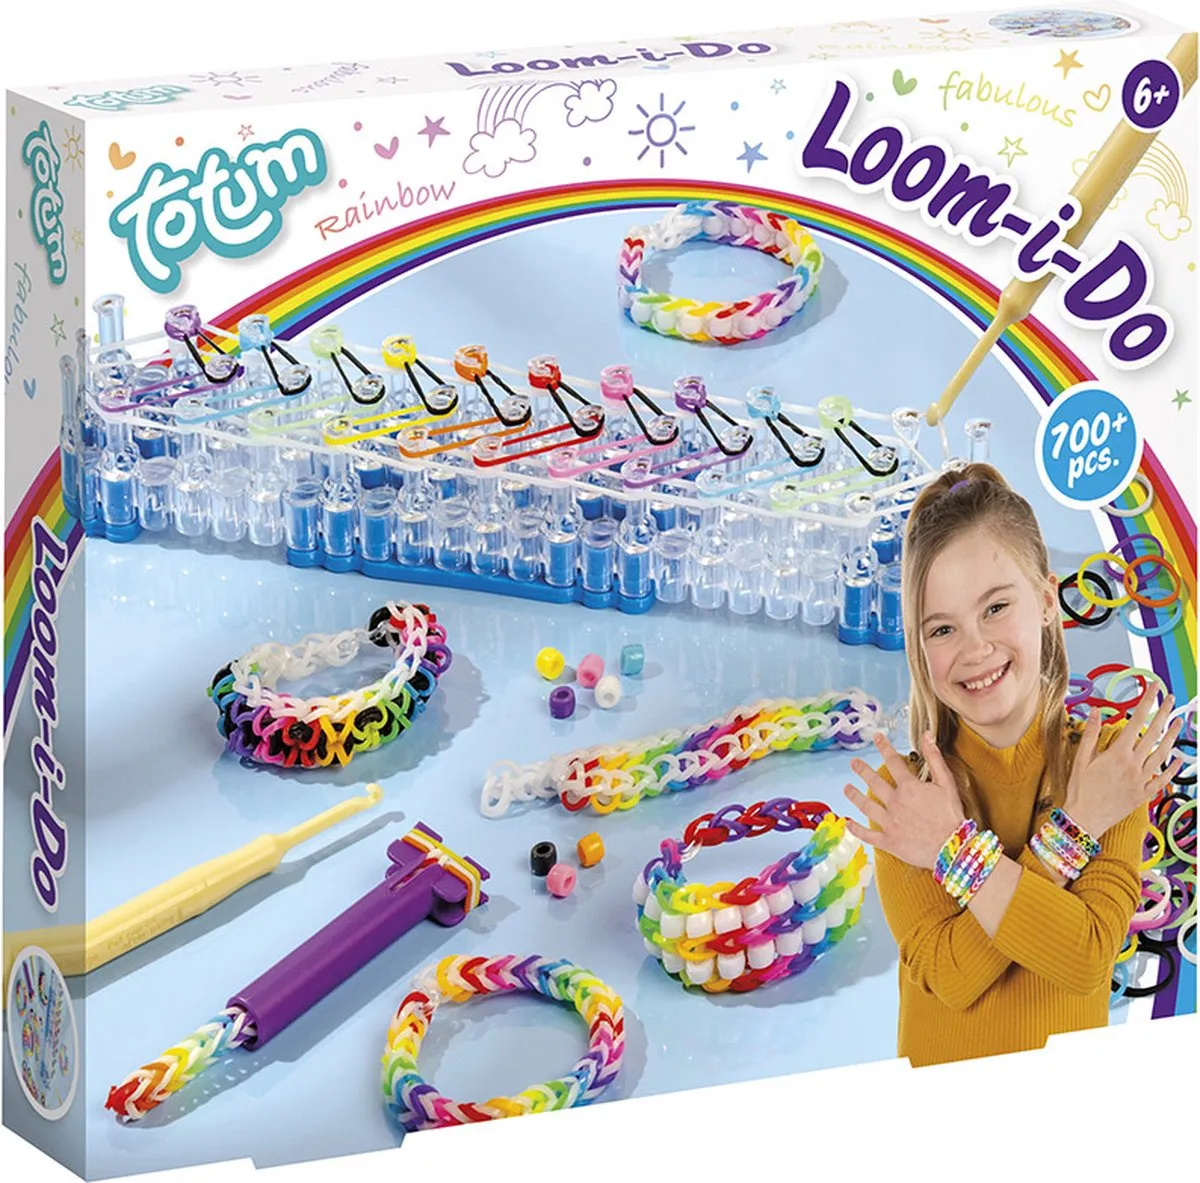 Totum Loom I do - regenboog loomset met tool en loom elastiekjes om armbandjes te maken - complete knutselset speelgoed